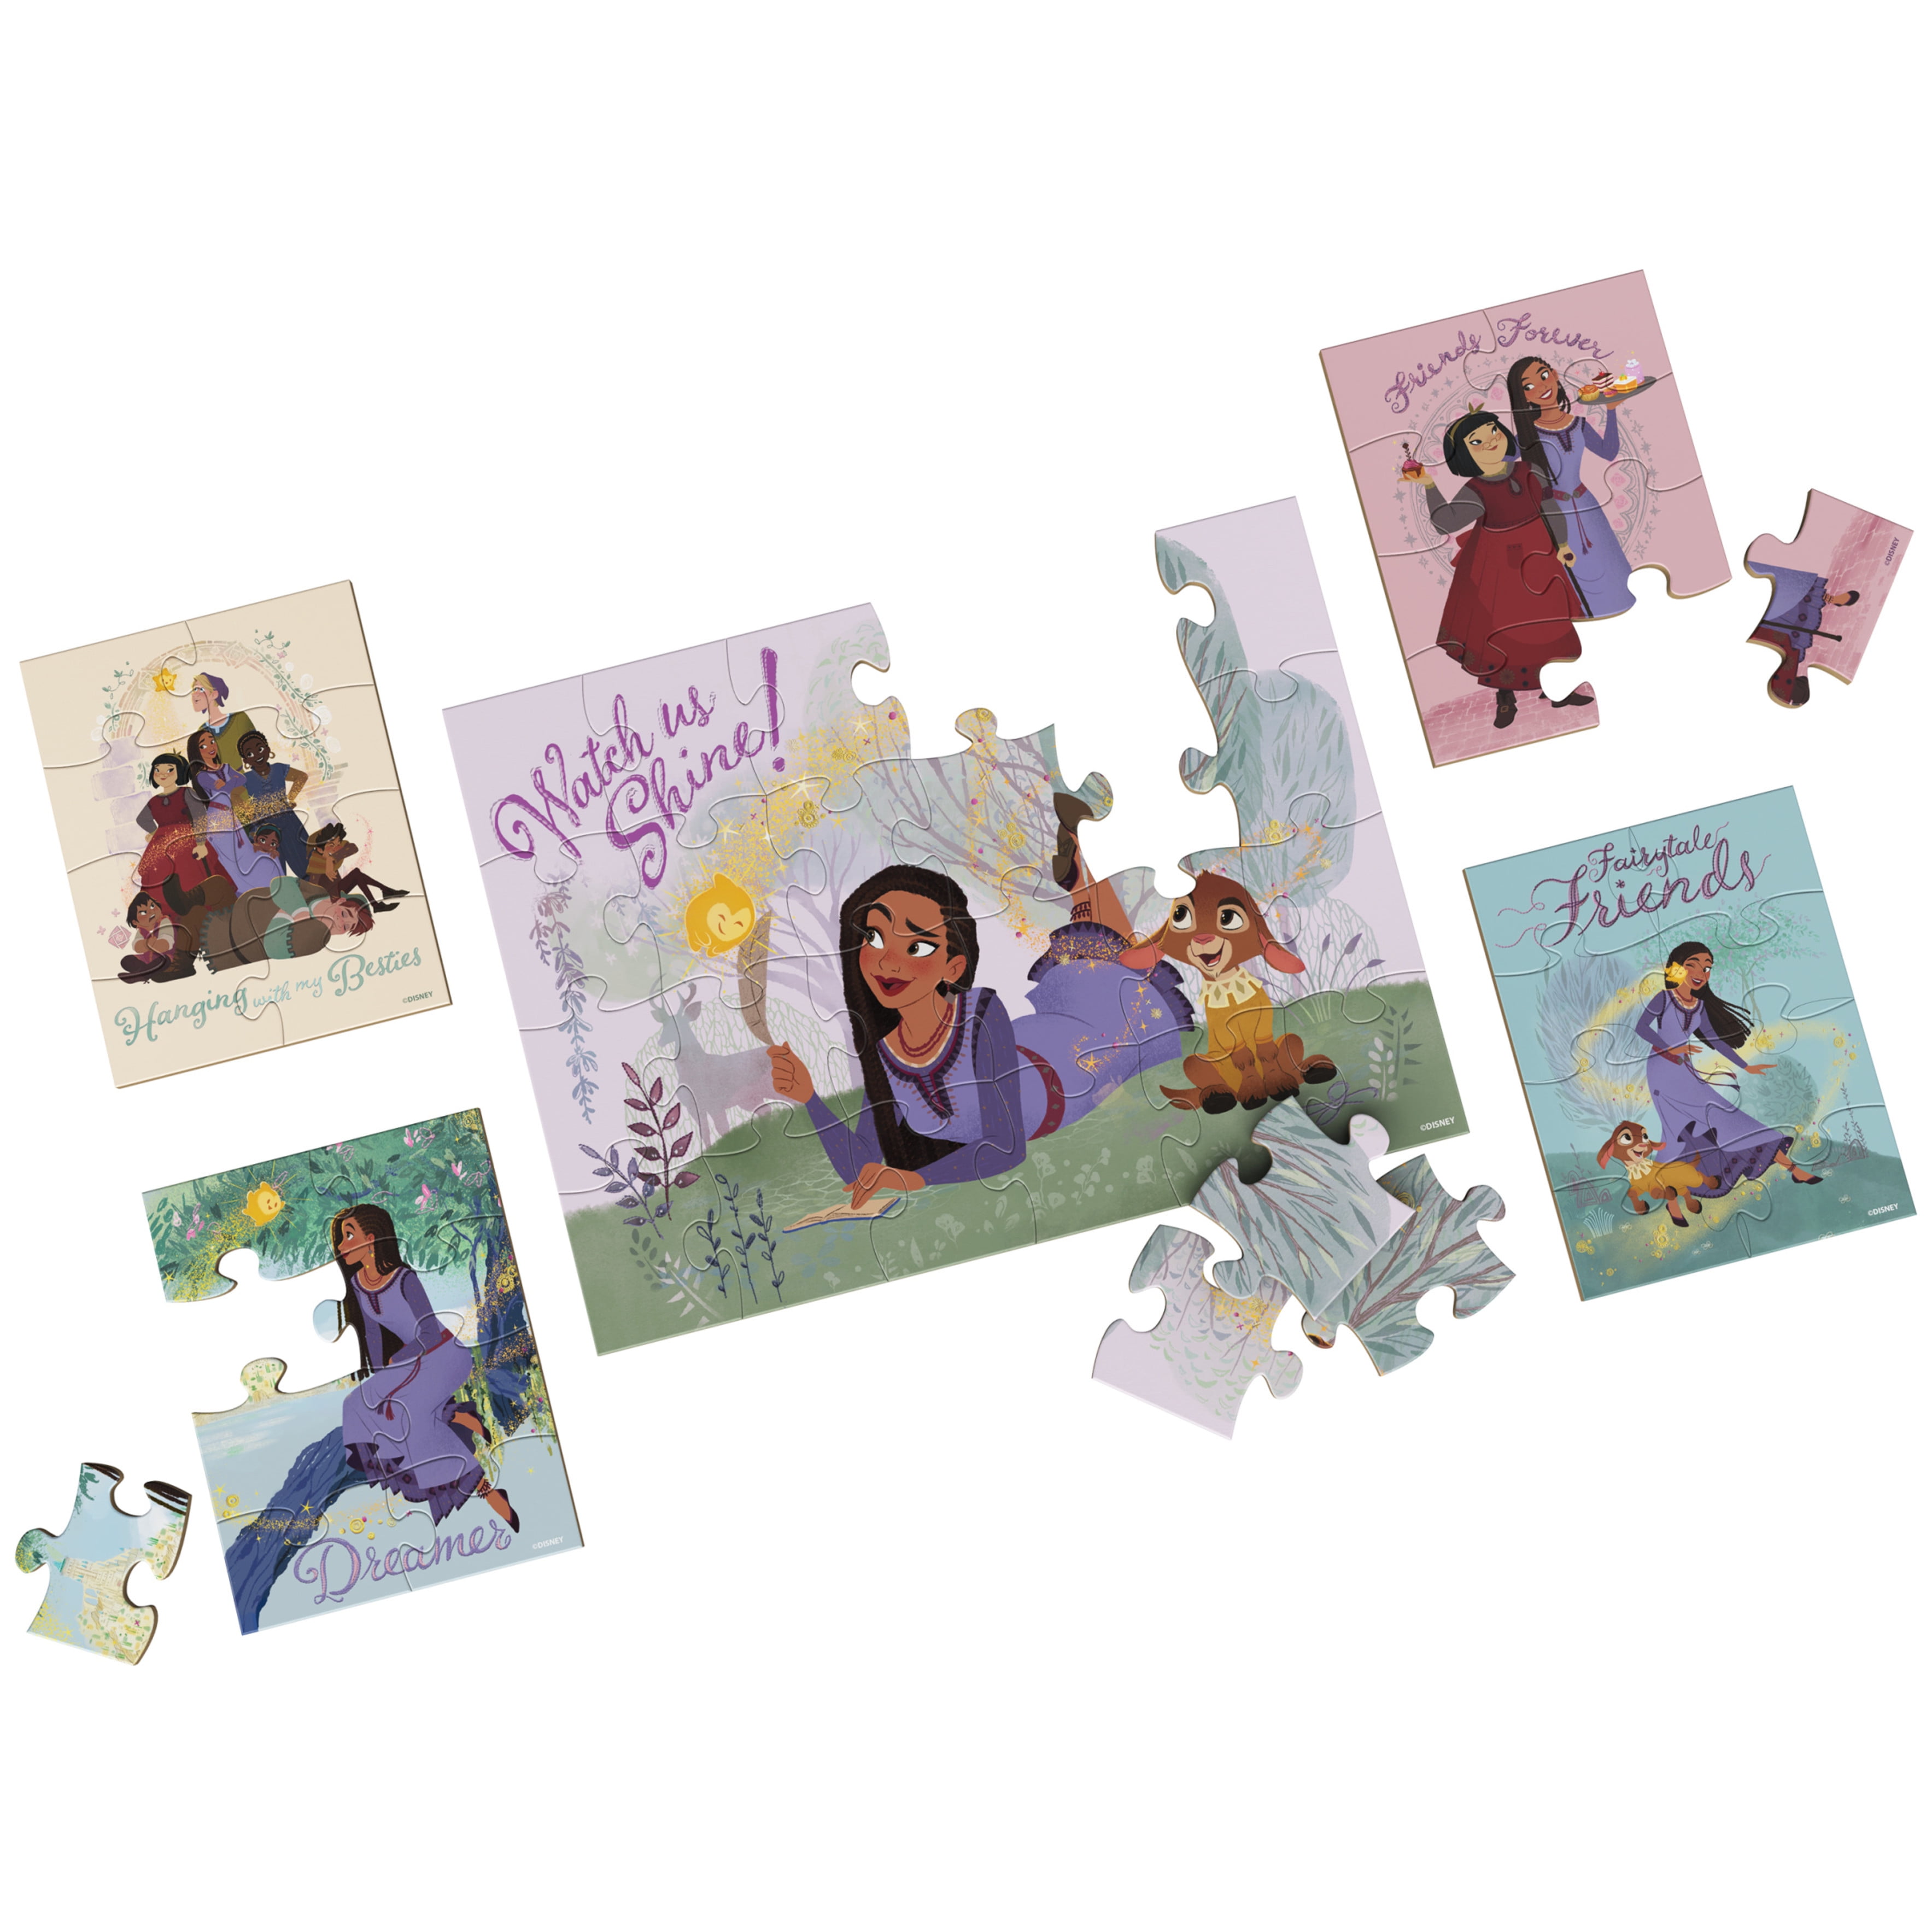 Disney Wish, 24-Piece Floor Puzzle Based on the Movie, Disney Gifts, Gifts for Kids, Disney Puzzle, Kids Toys